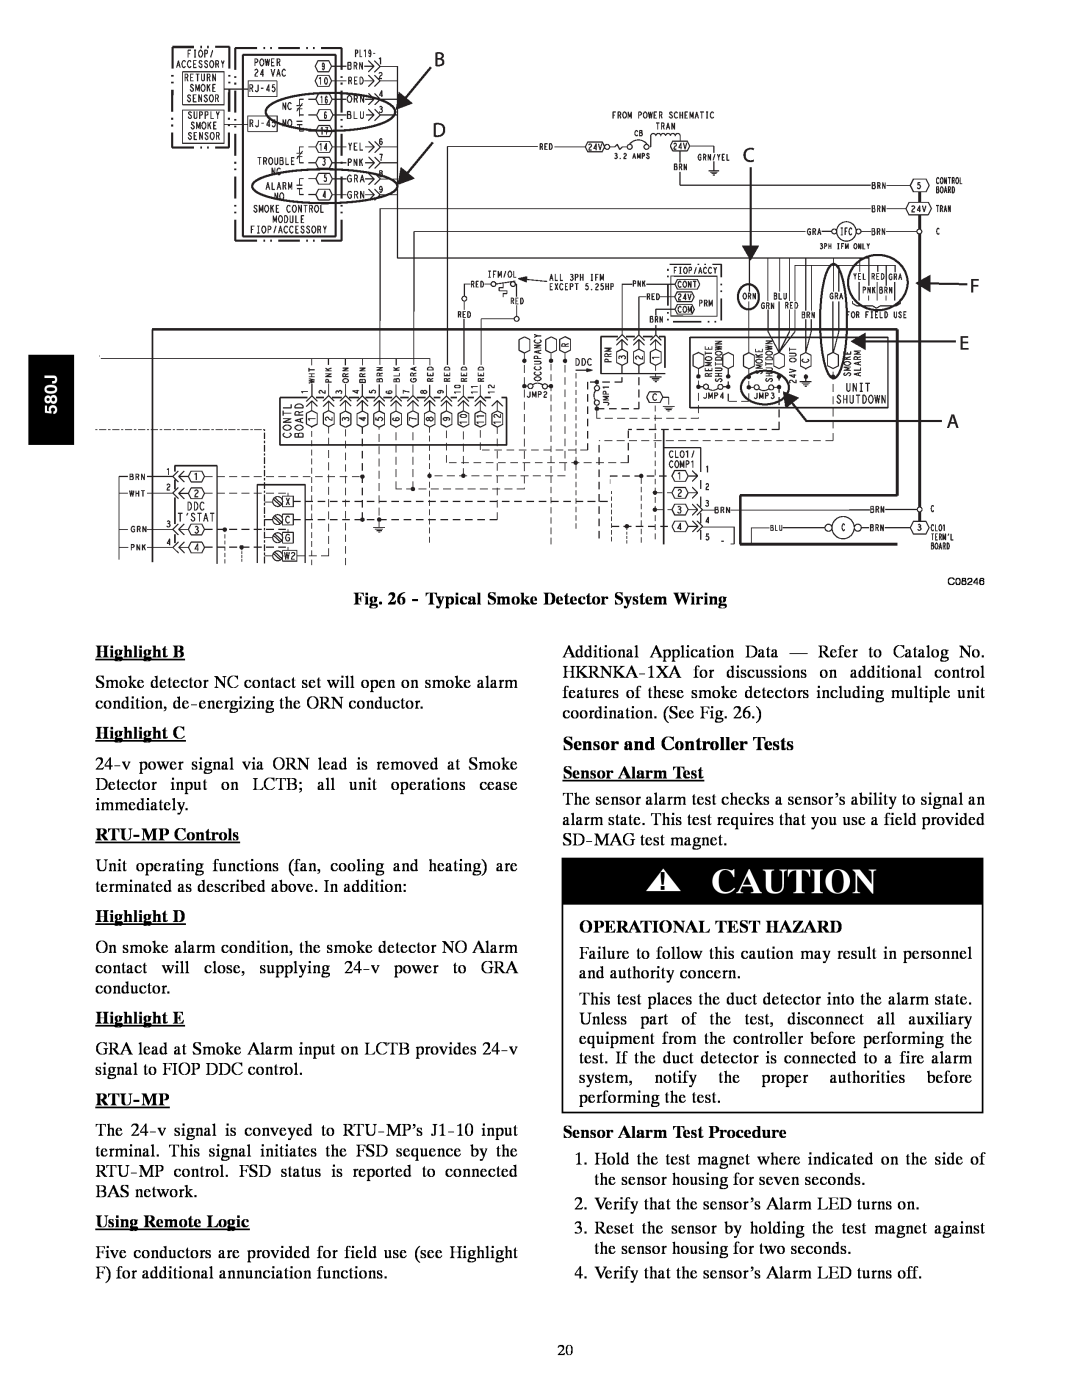 Bryant F Sensor and Controller Tests, Typical Smoke Detector System Wiring, Highlight B, Highlight C, RTU-MPControls, 580J 